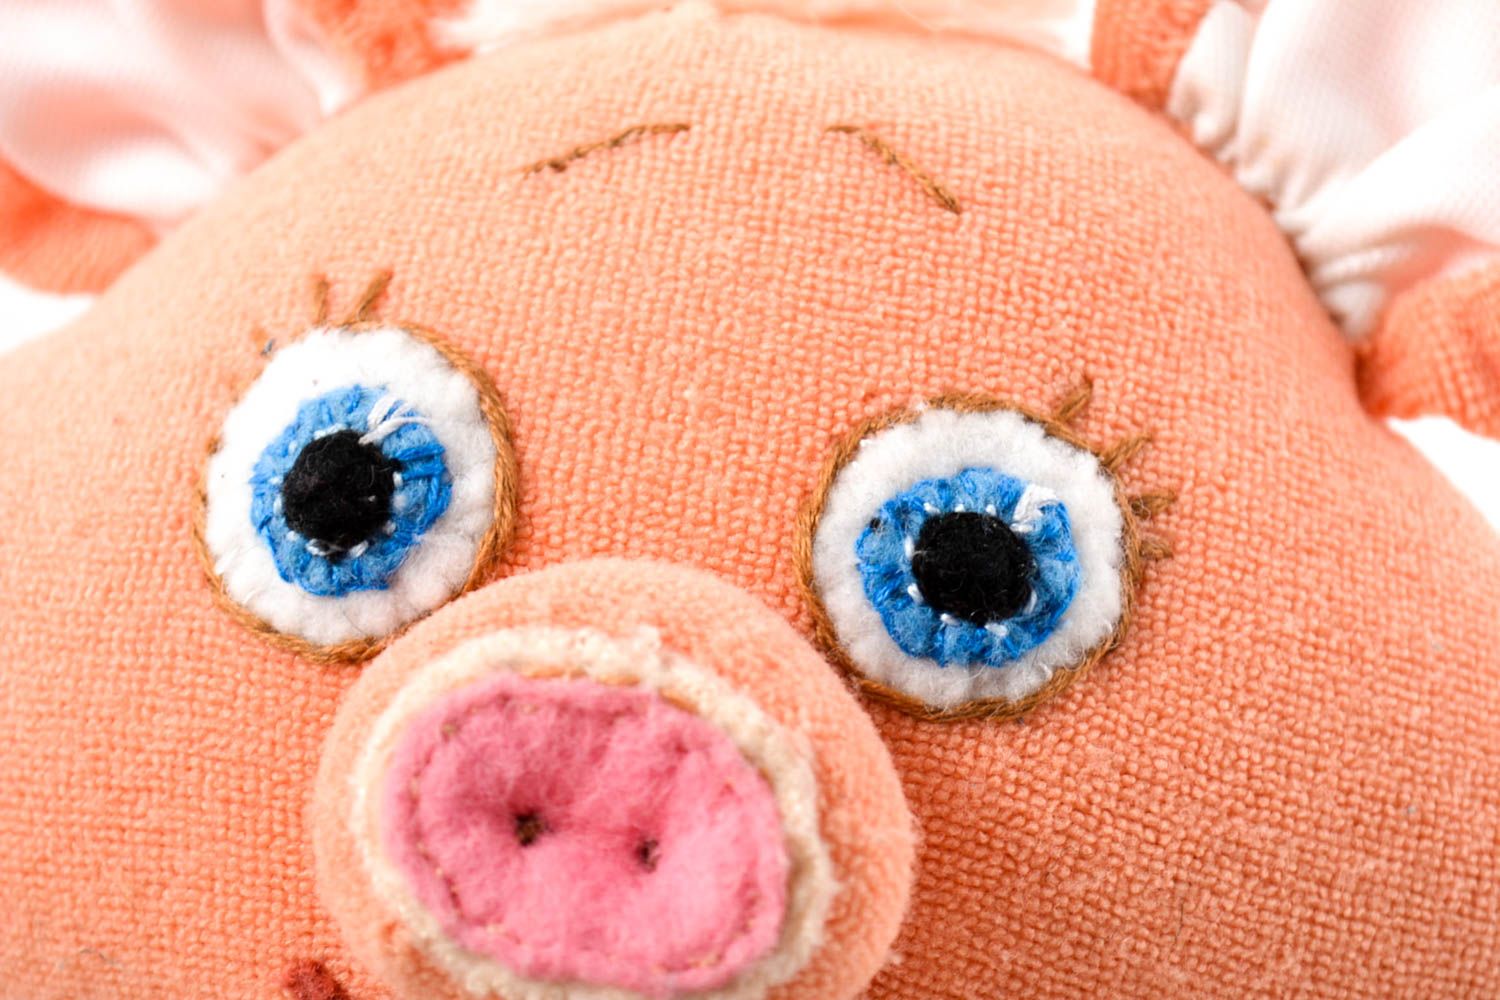 Handmade puppet toy stuffed toys nursery decor ideas present for children photo 2